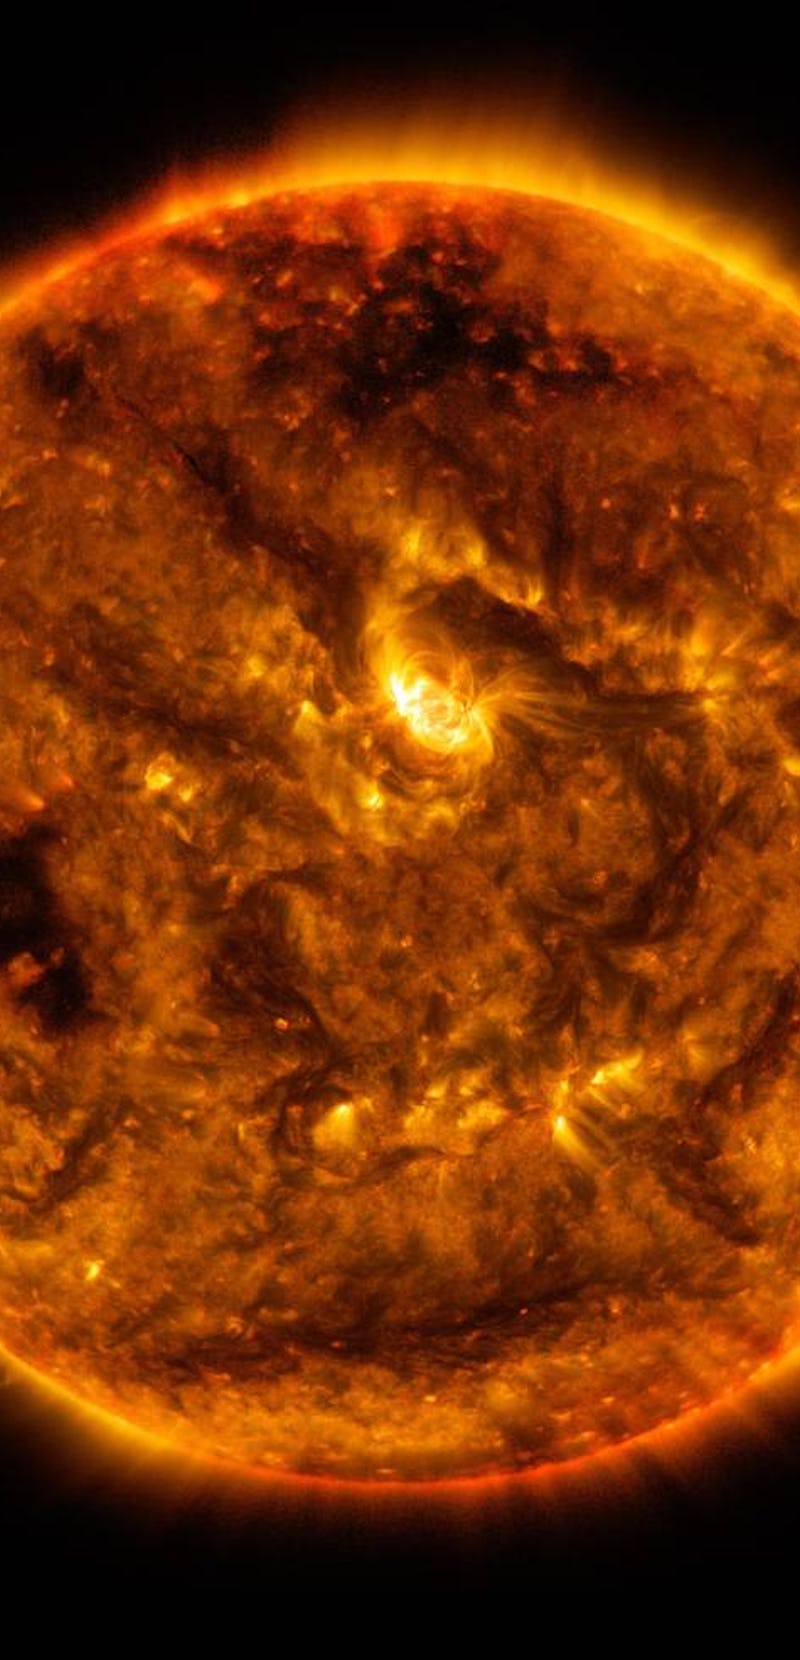 Sun emitting solar flare